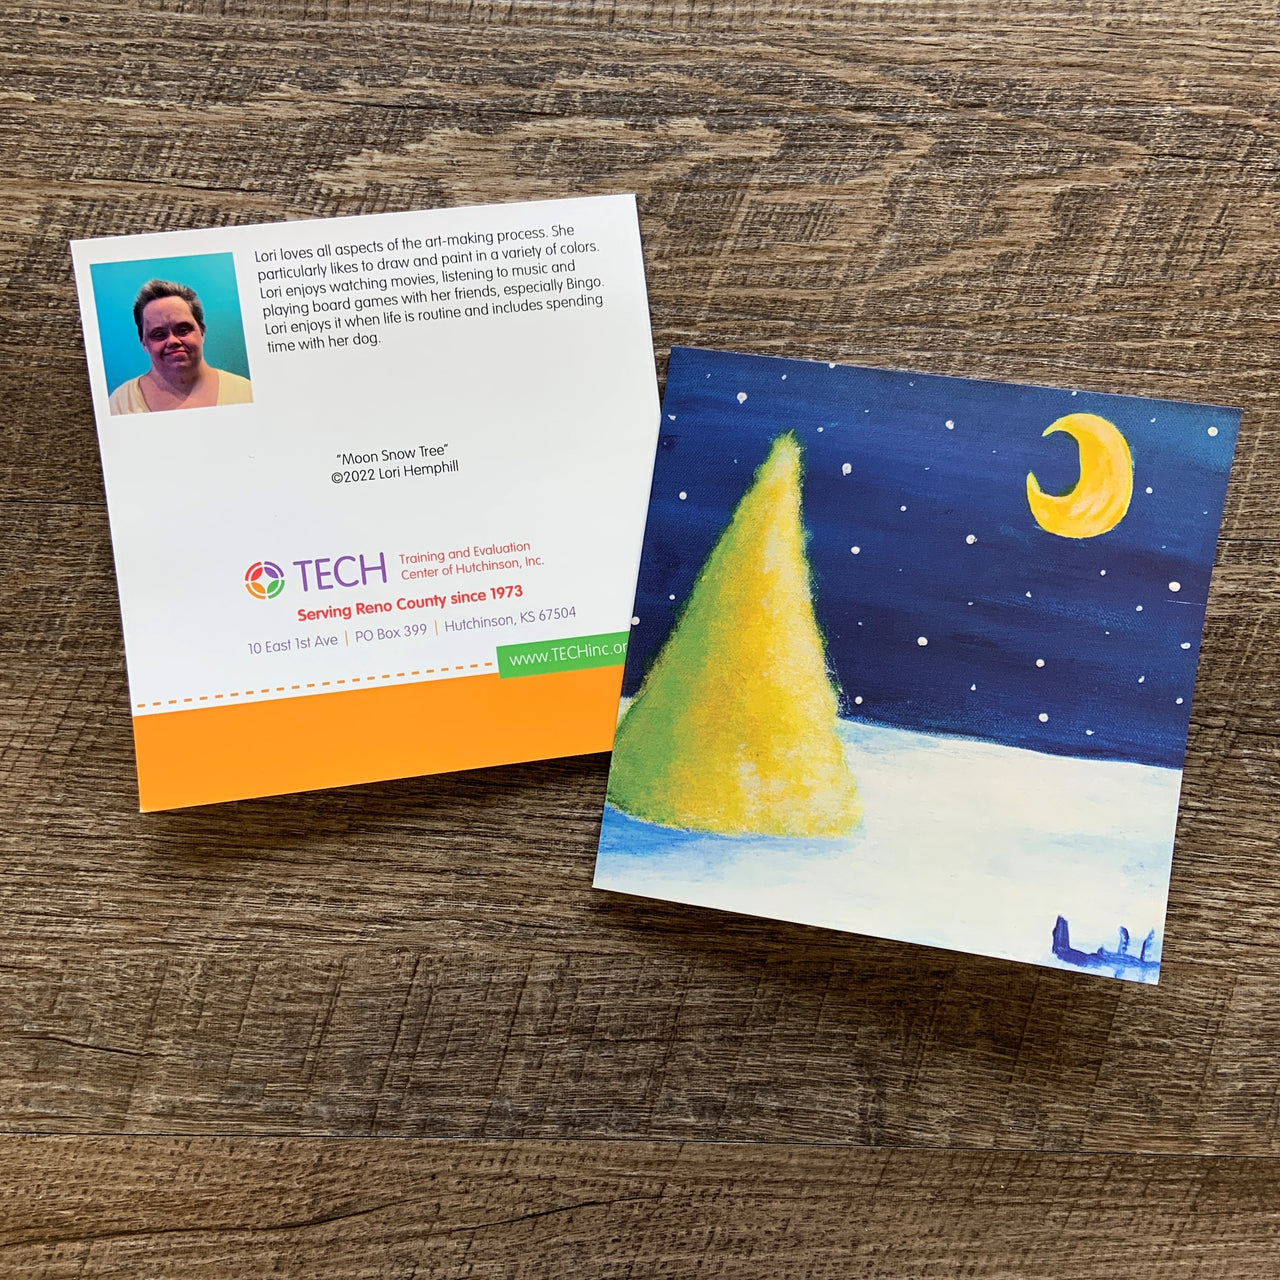 "Moon Snow Tree" Cards by Lori Hemphill